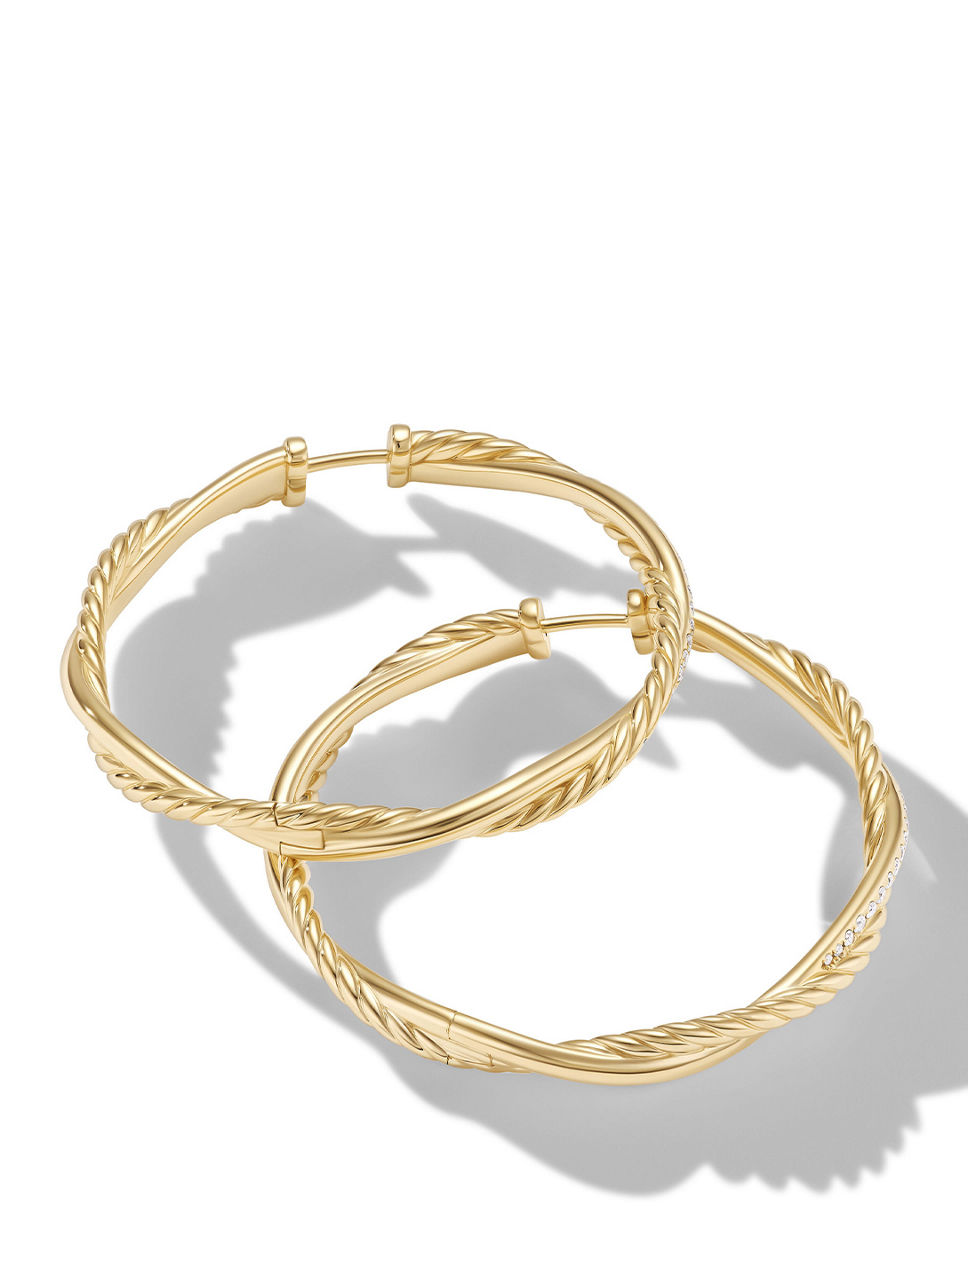 Petite Infinity Hoop Earrings In 18k Yellow Gold With Pavé Diamonds